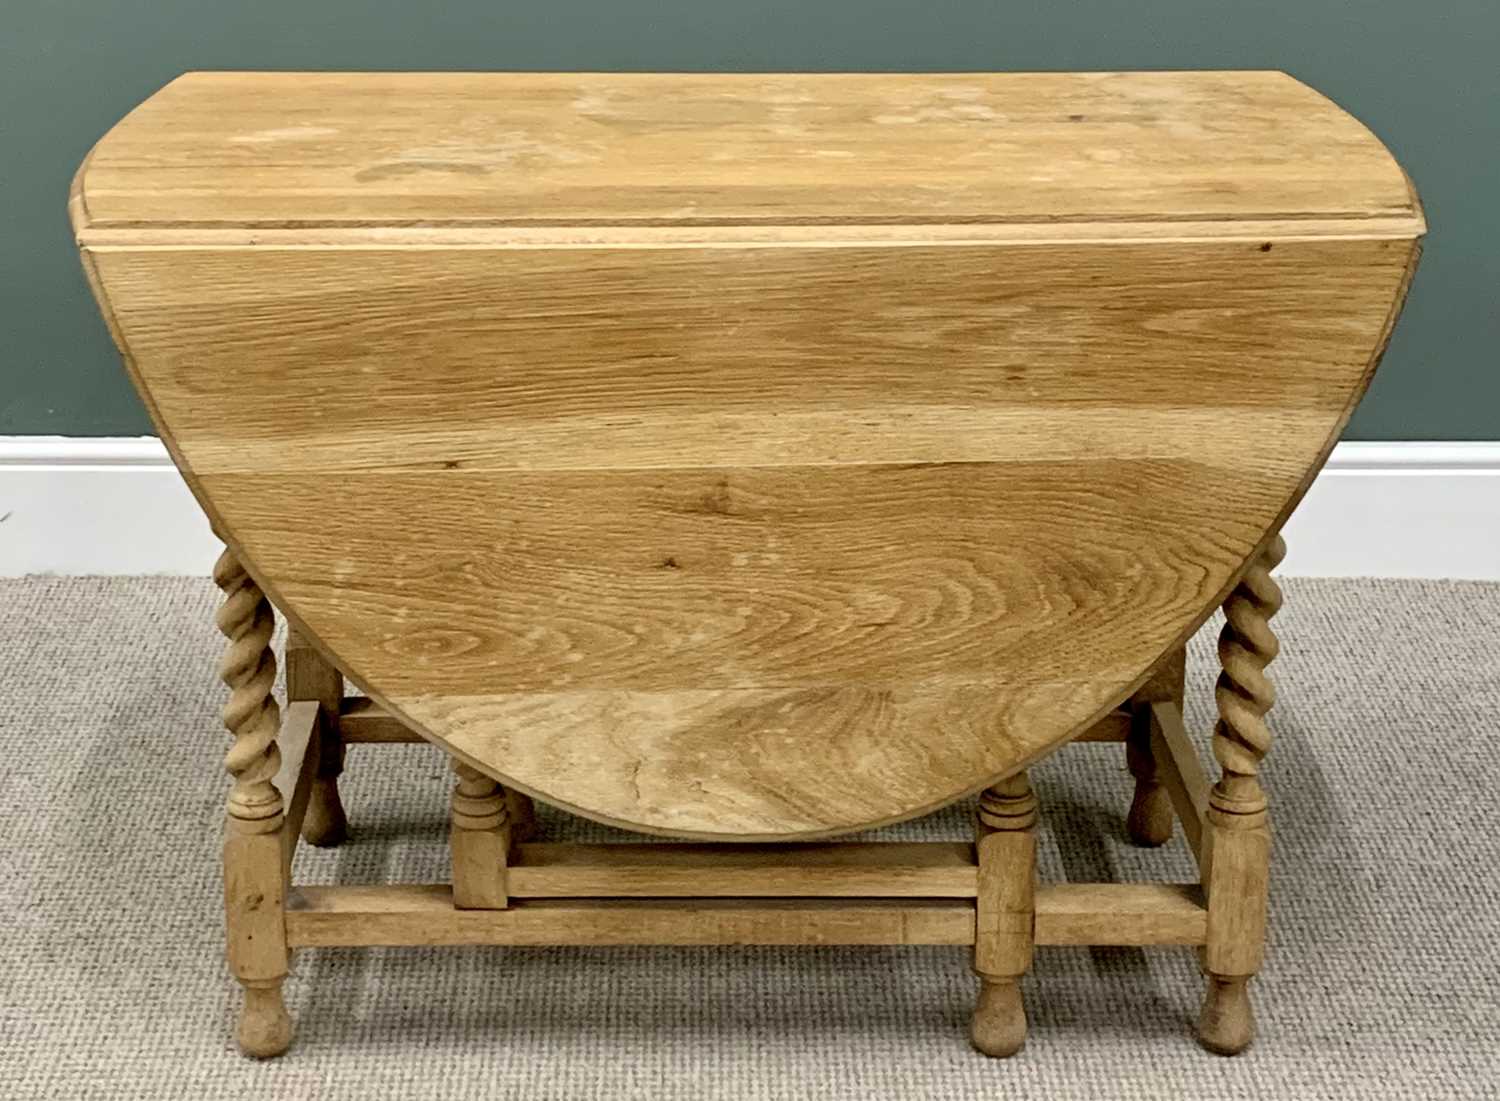 BARLEY TWIST GATE LEG TABLE - bleached oak, 74cms H, 149cms W, 107cms D (open)